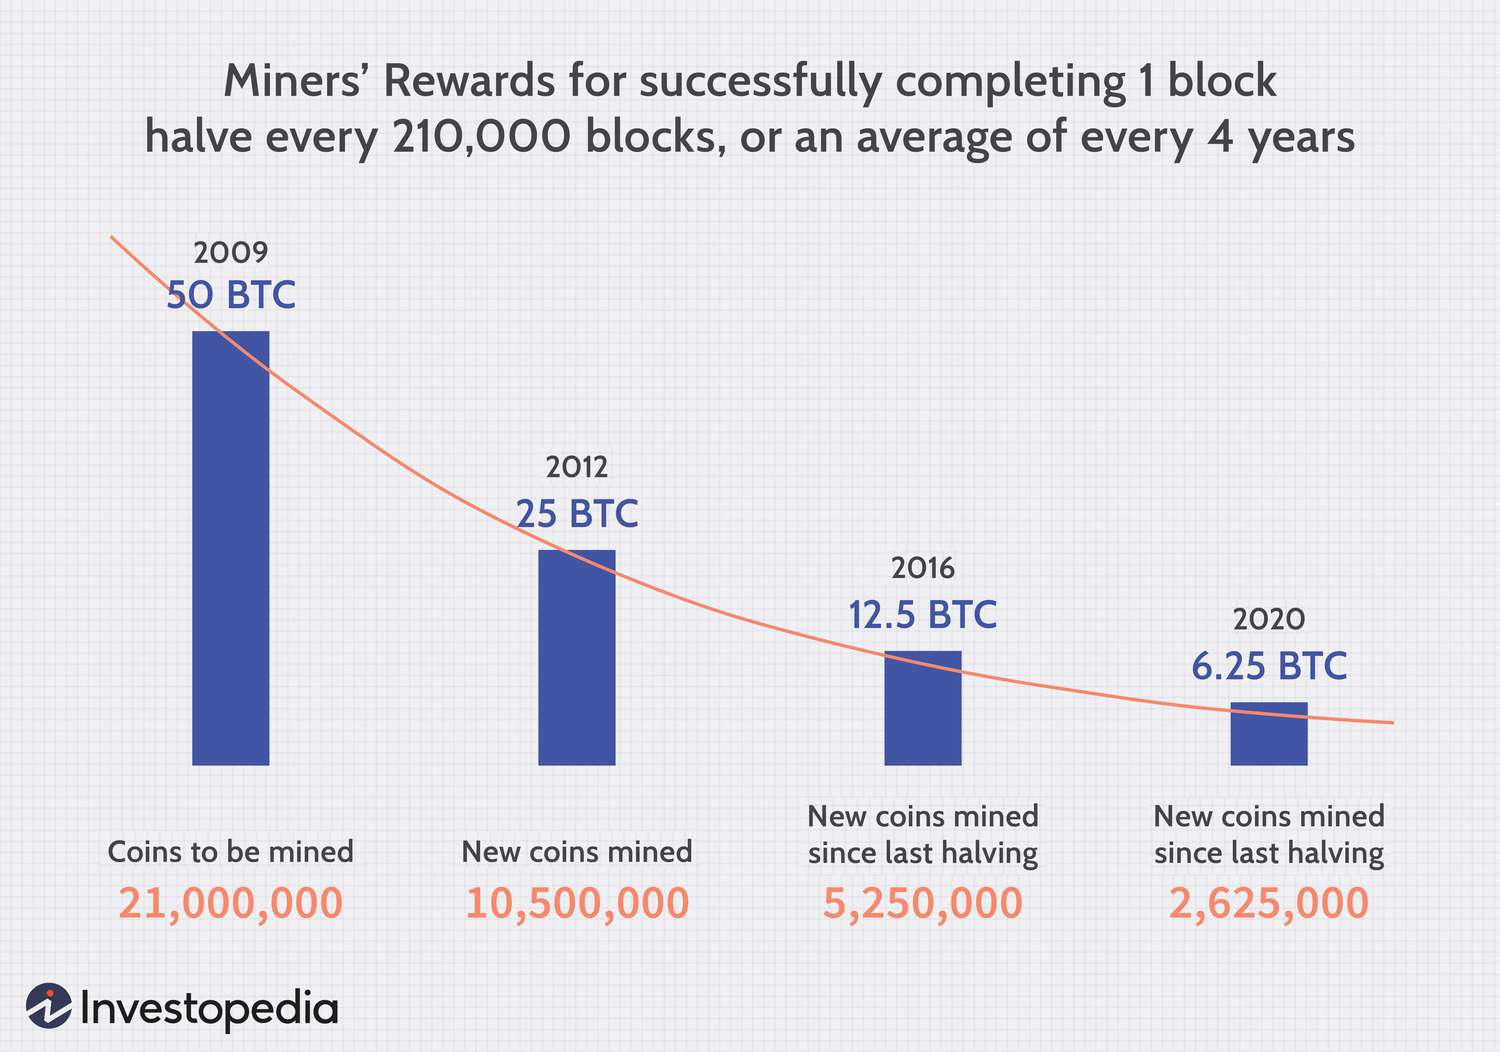 8. Mining and Consensus - Mastering Bitcoin [Book]